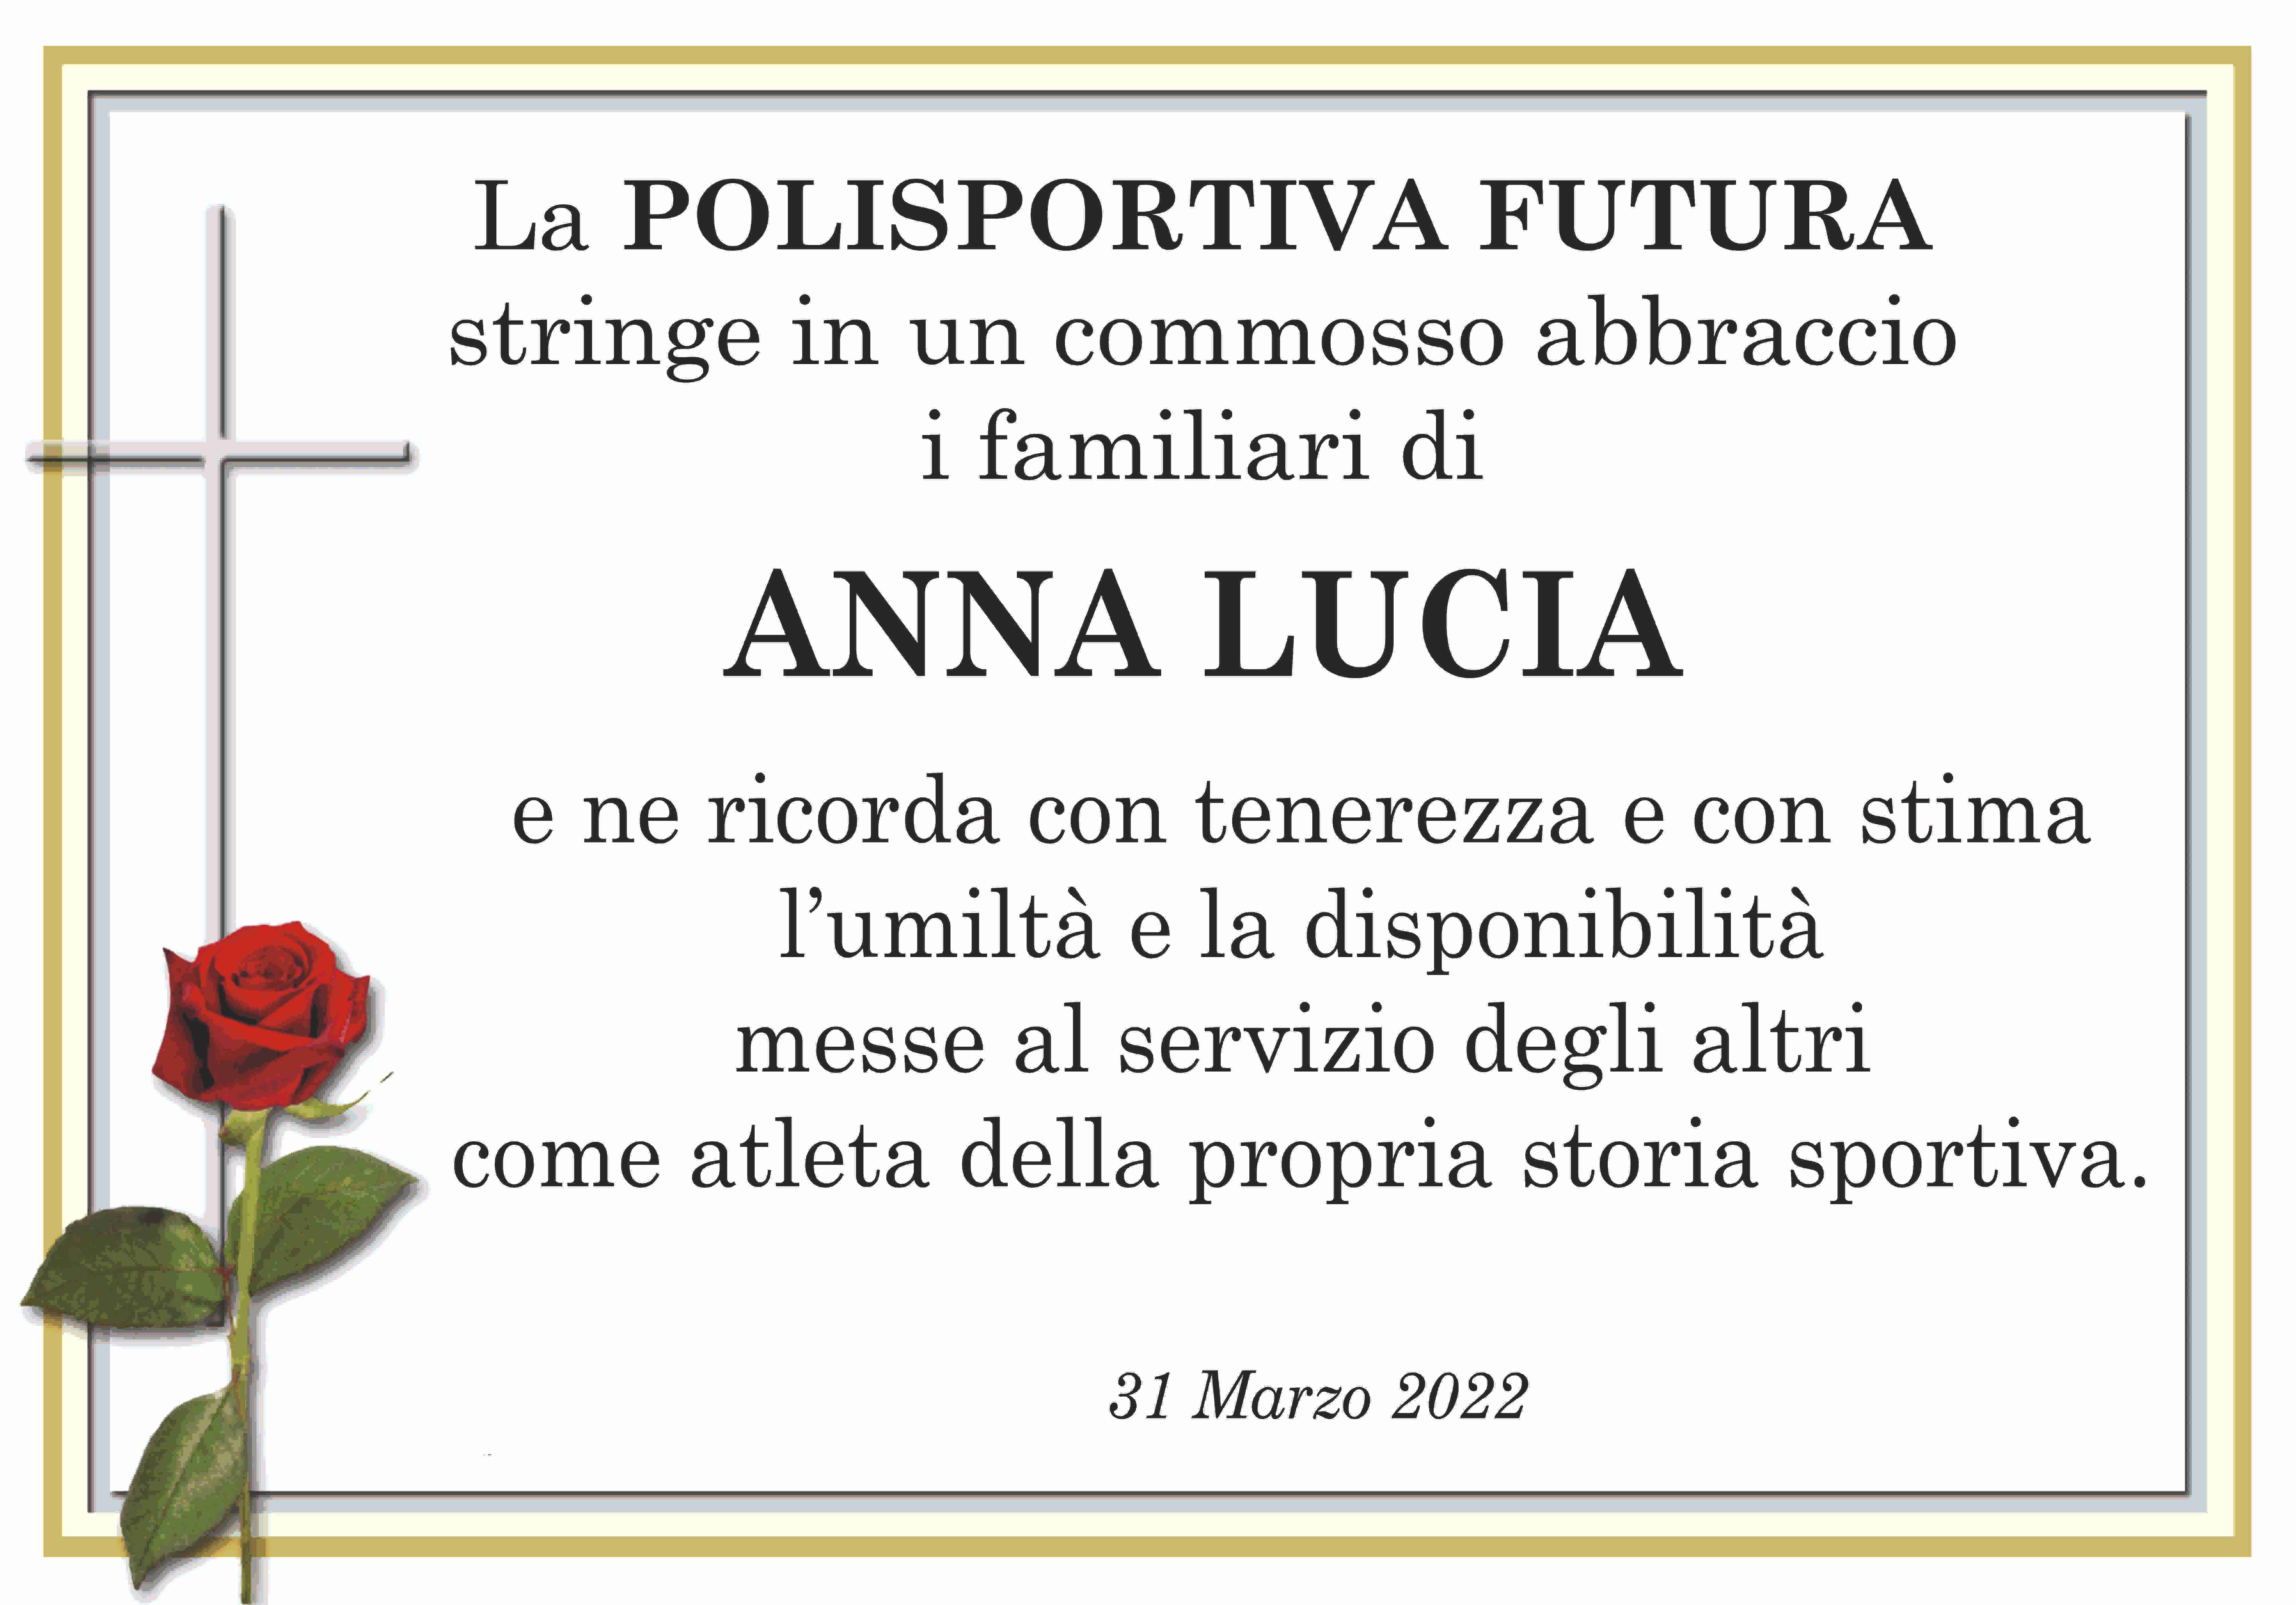 Anna Lucia Merico